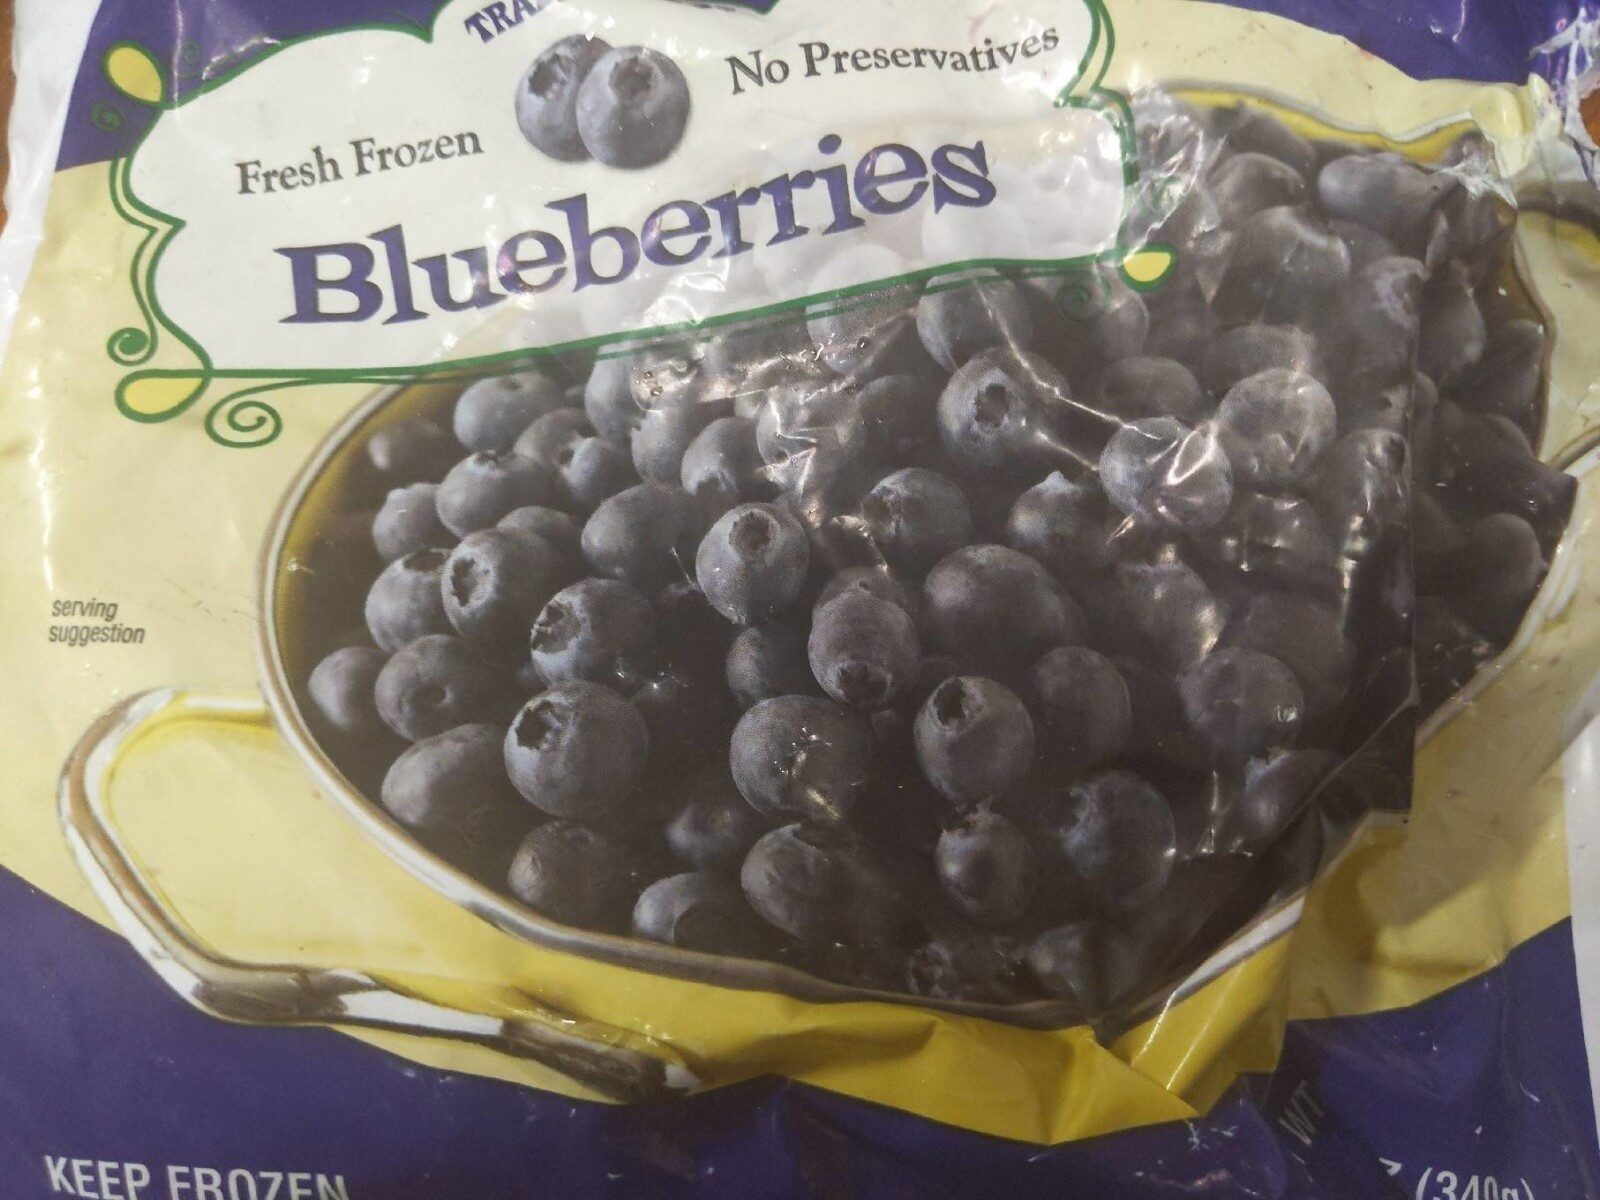 Trader Joe's, Fresh Frozen, No Preservatives, Blueberries - Product